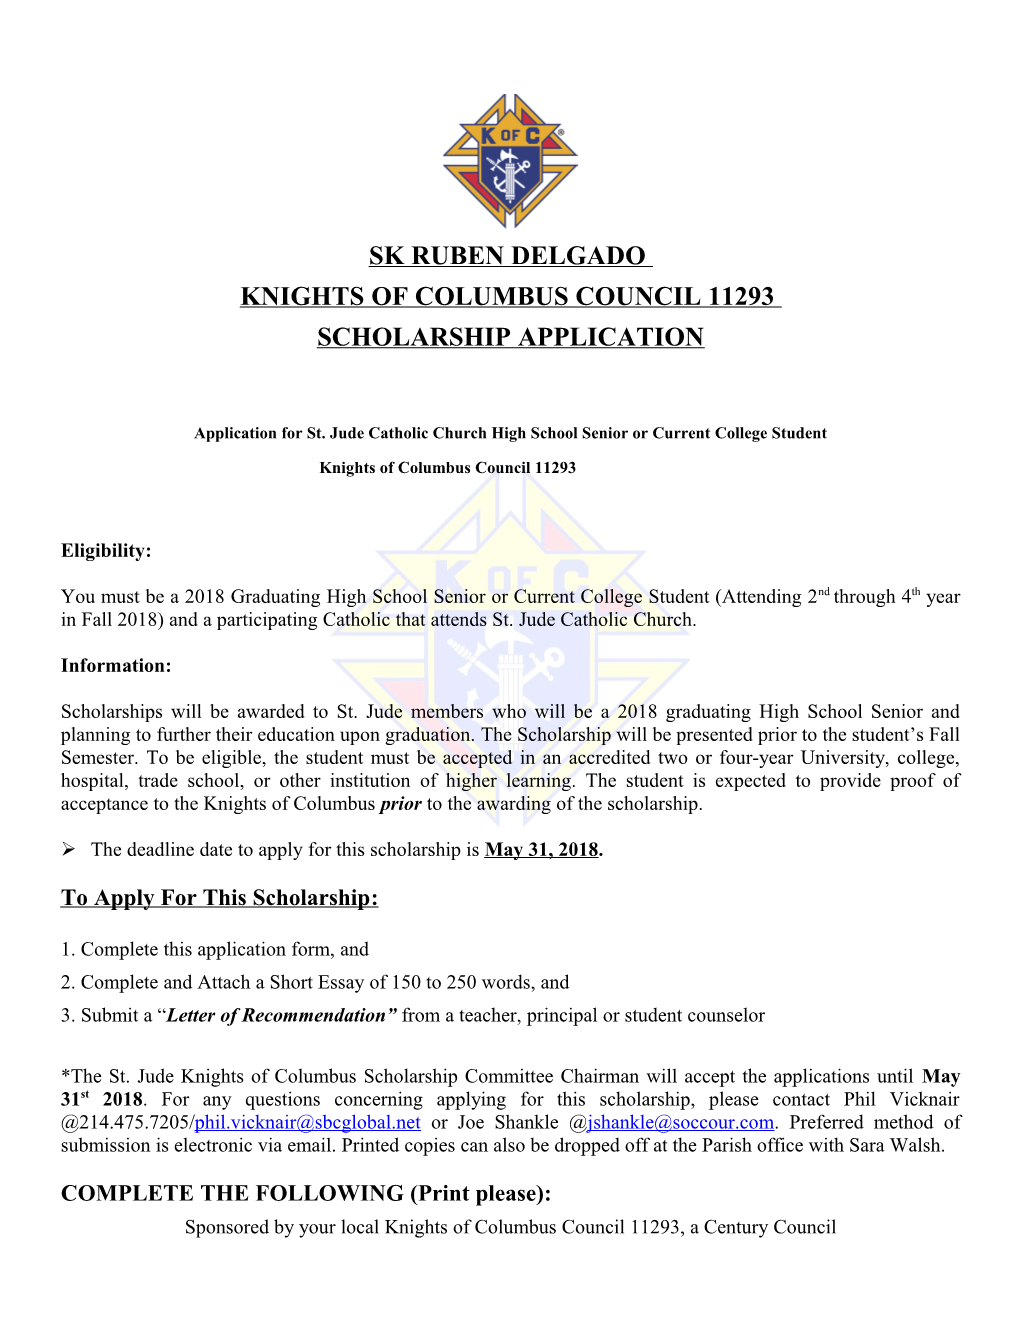 Greeley Knights of Columbus Scholarship Application